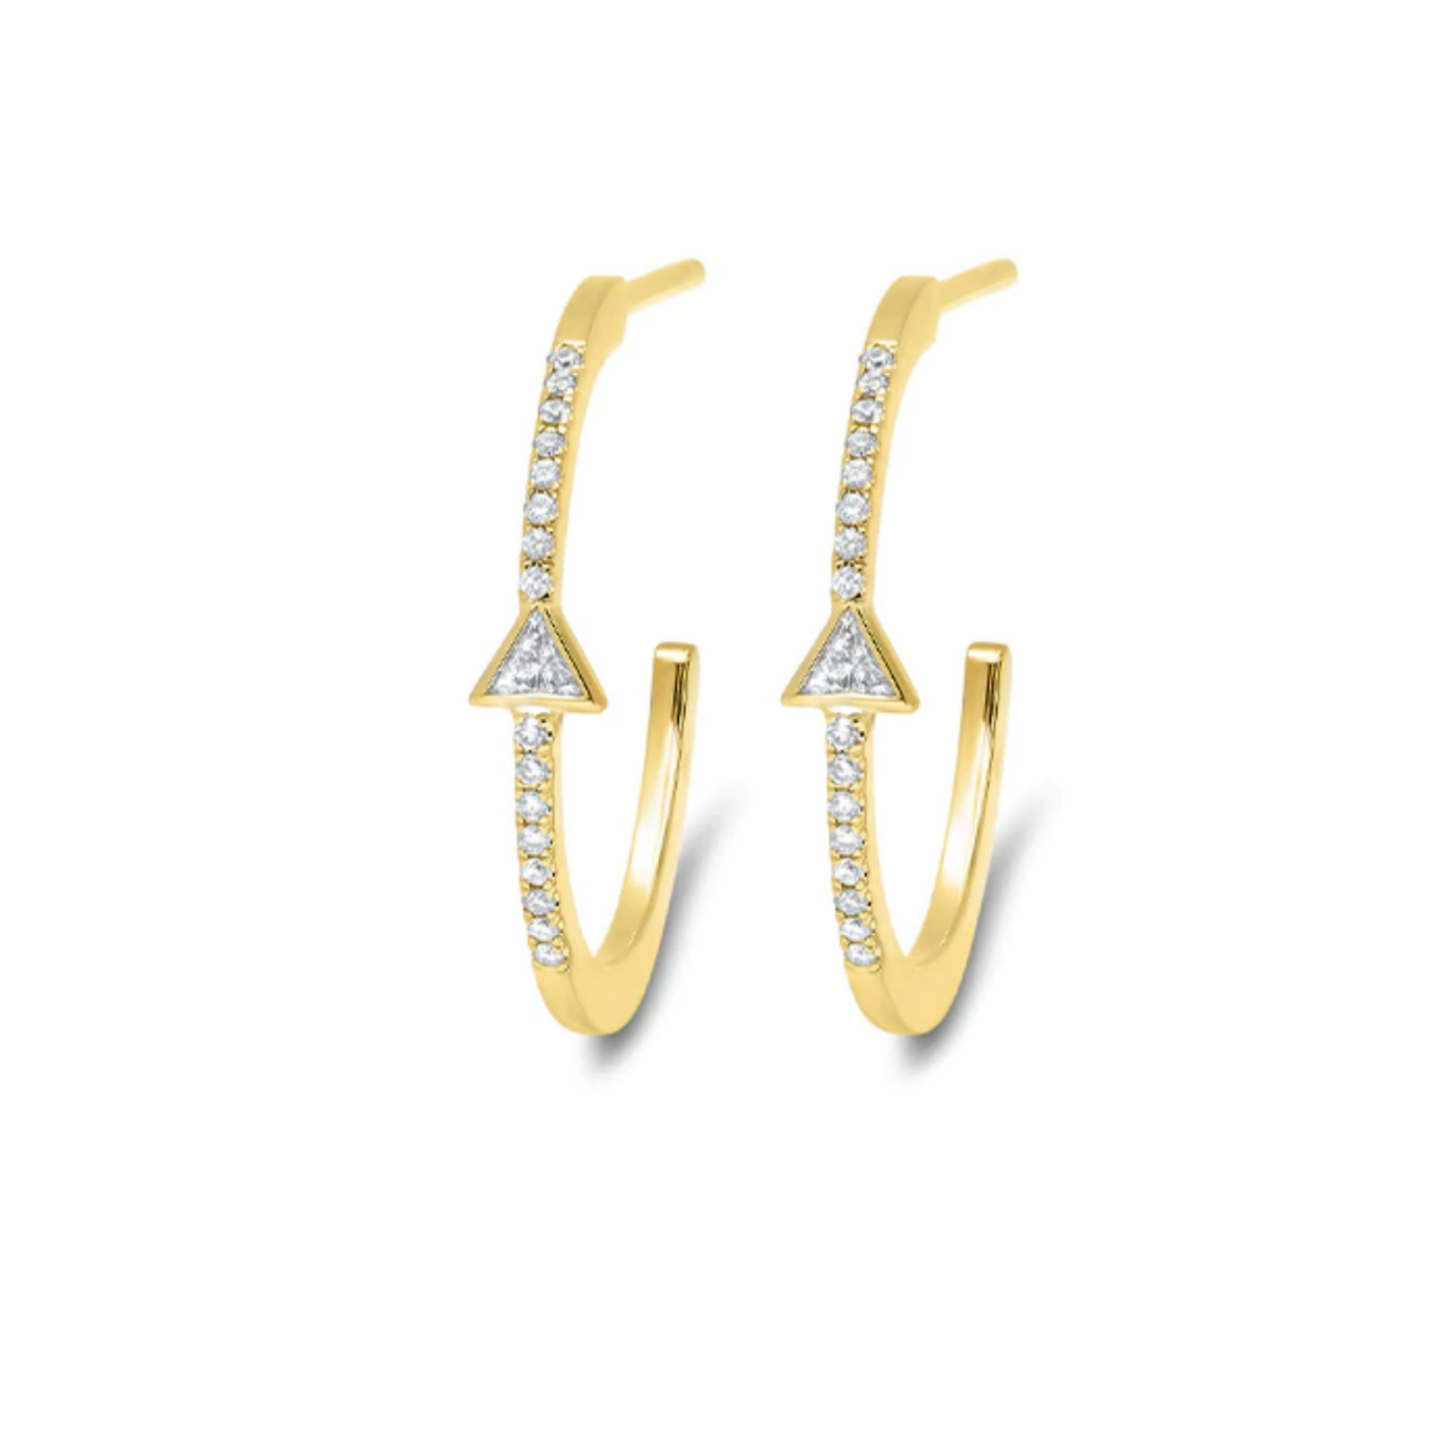 Ava earrings - gold plated